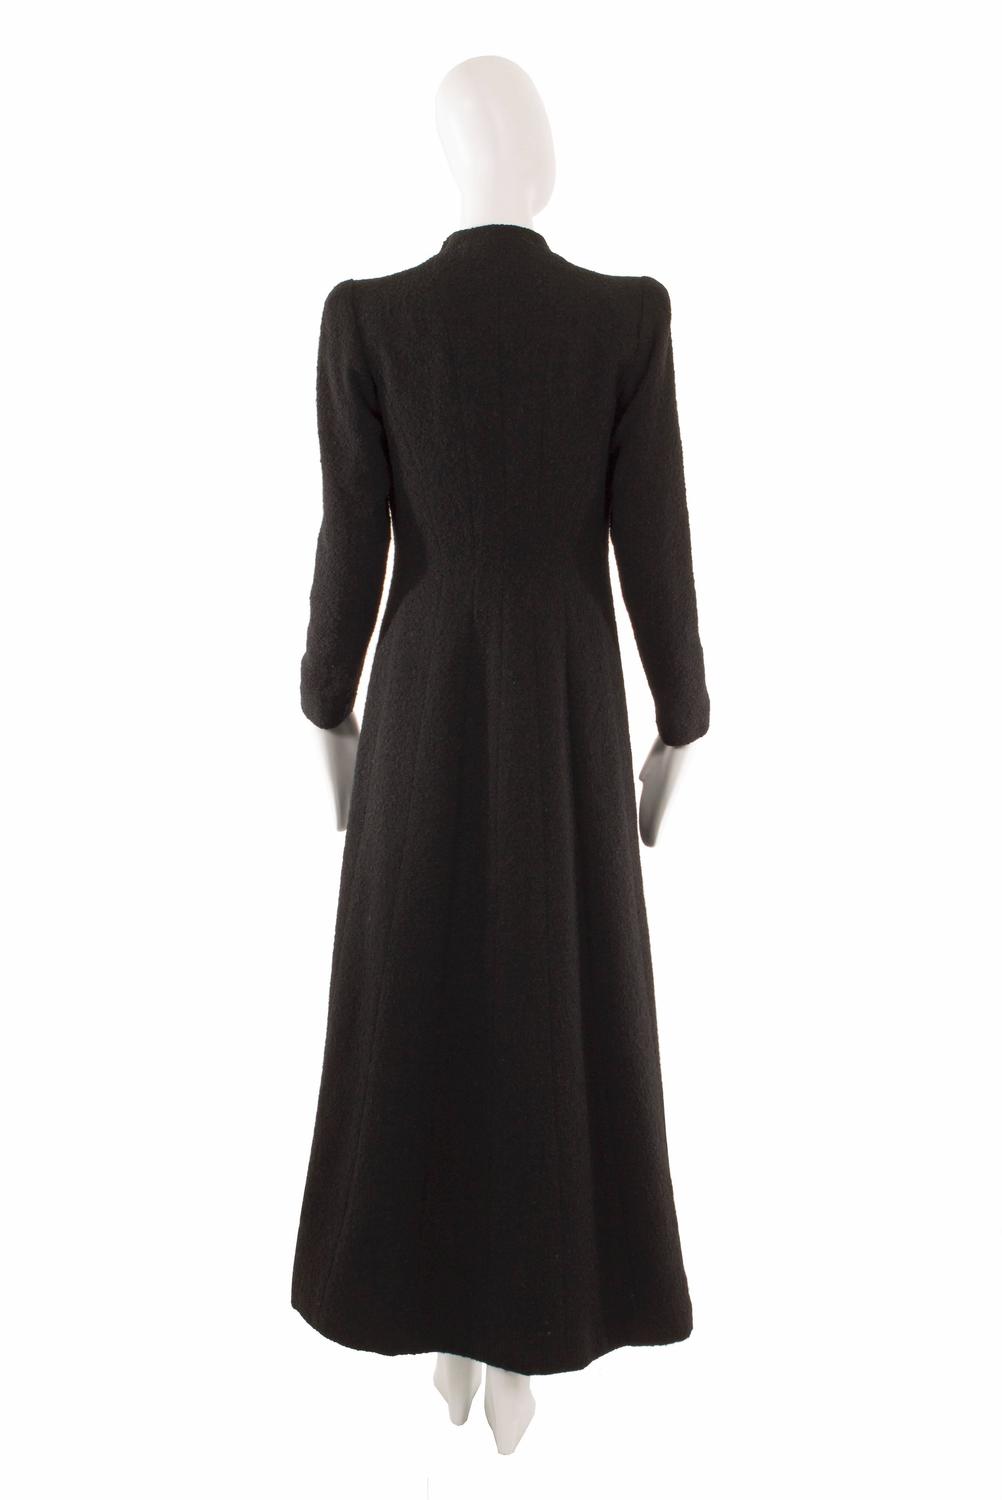 Schiaparelli haute couture black wool coat, autumn winter 1936 For Sale ...